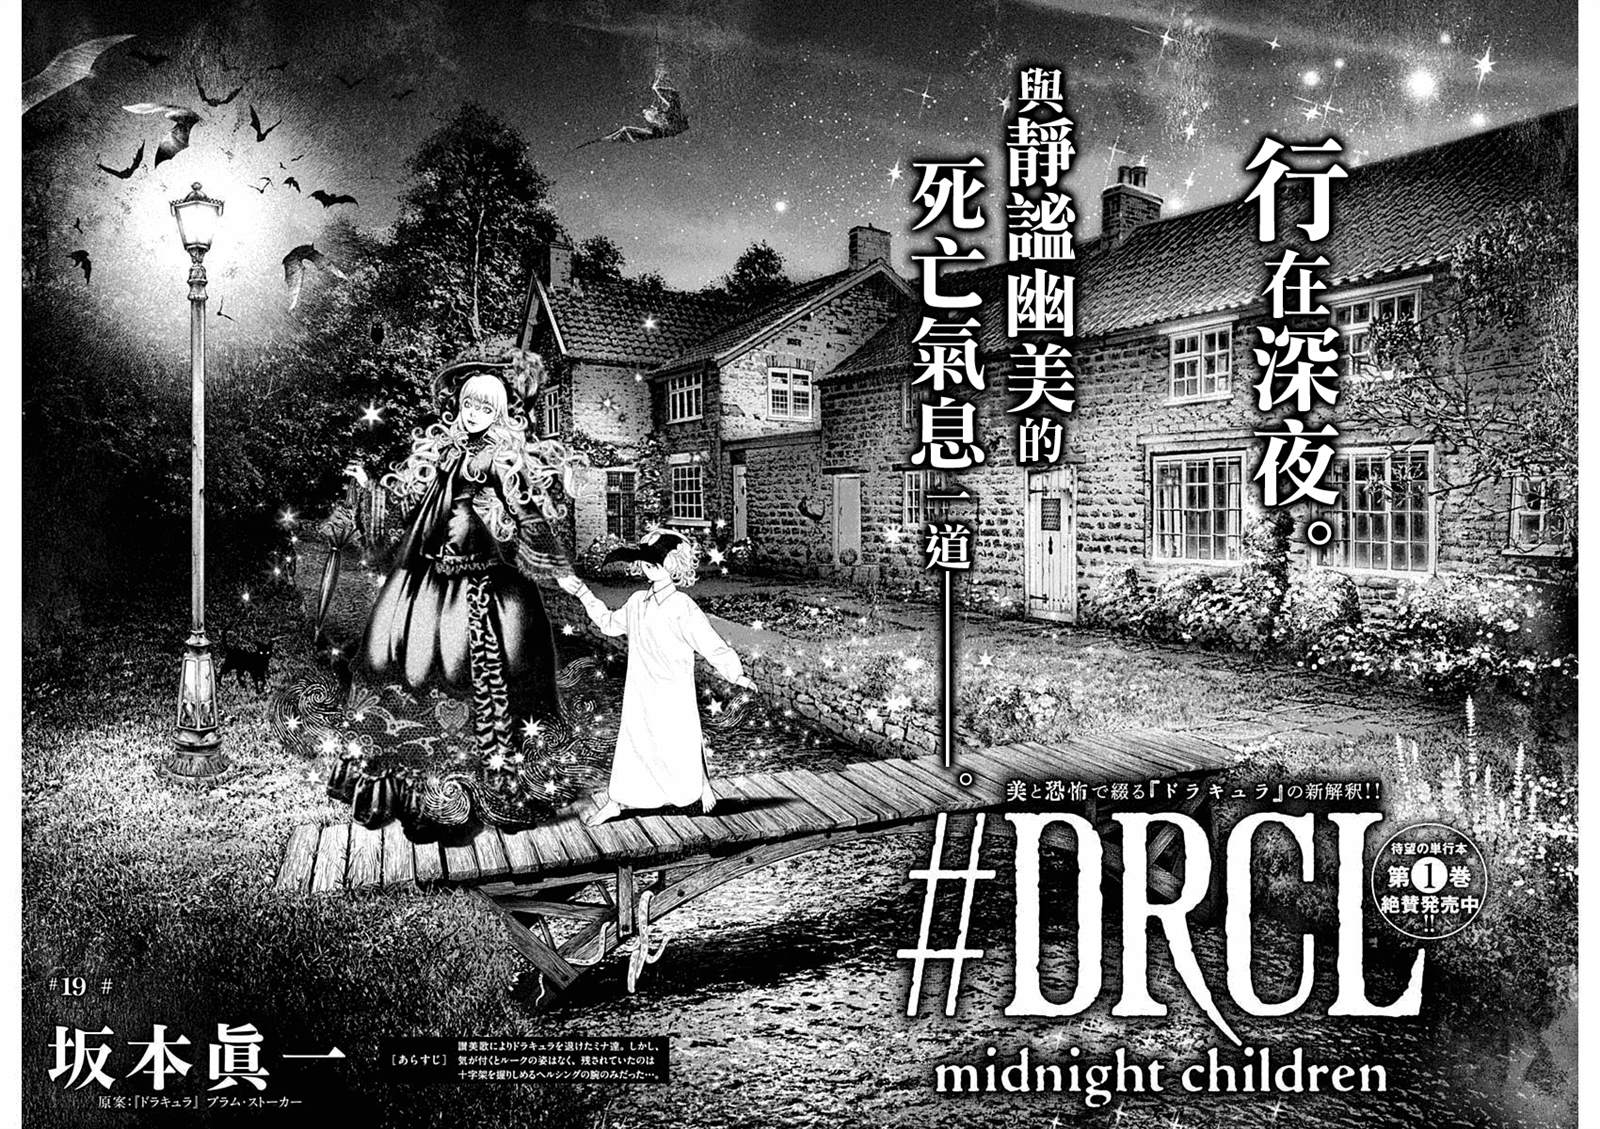 DRCL midnight children - 第19話 - 3